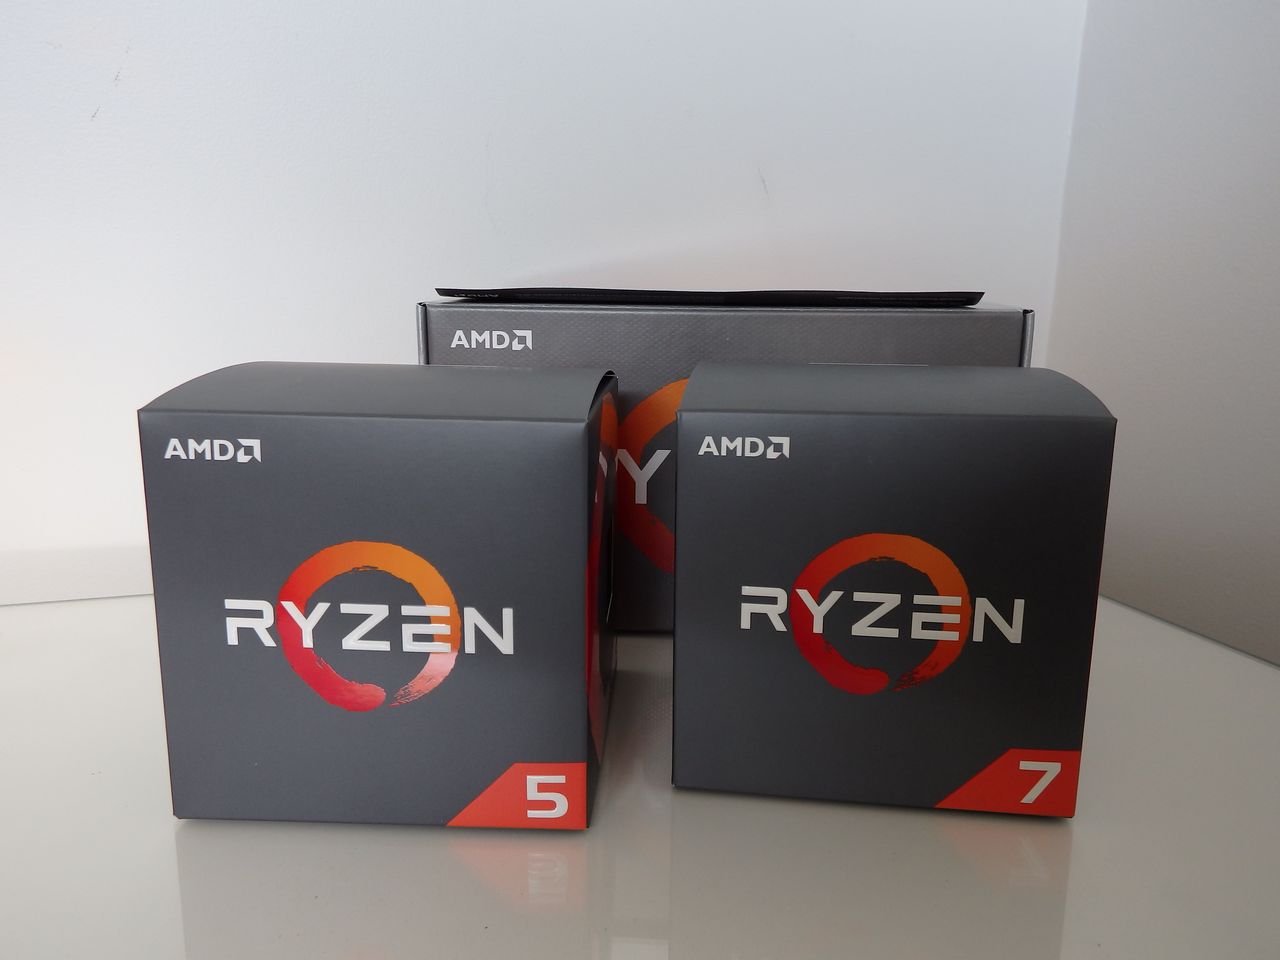 Reviewed: RYZEN 5 2600 & RYZEN 7 2700 - PC Tech Reviews Australia